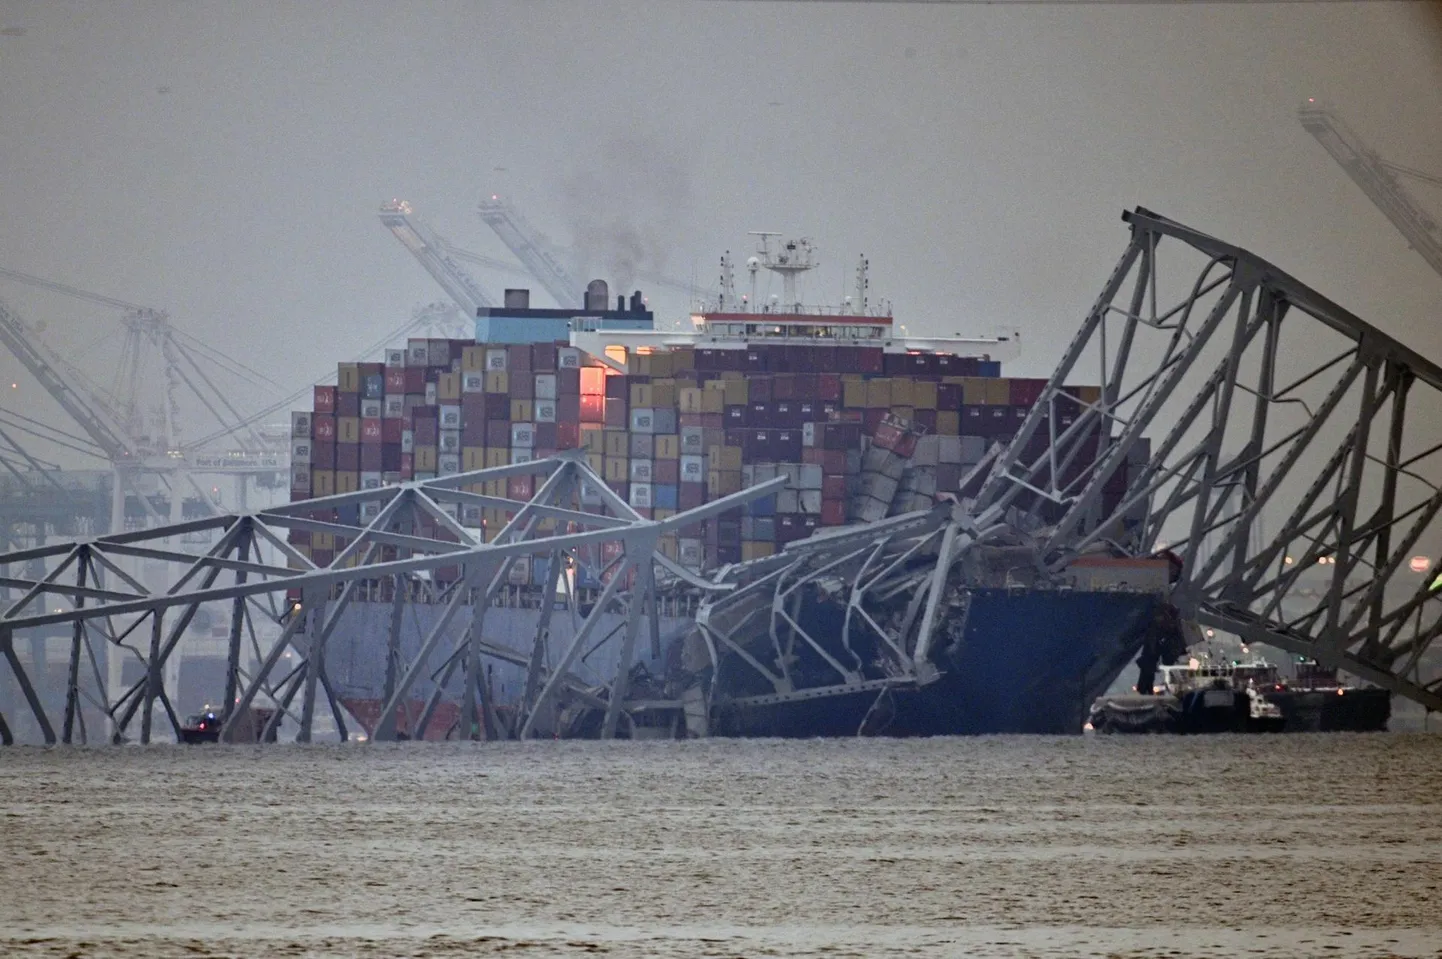 Baltimore’i Francis Scott Key silda ramminud konteinerilaev Dali.